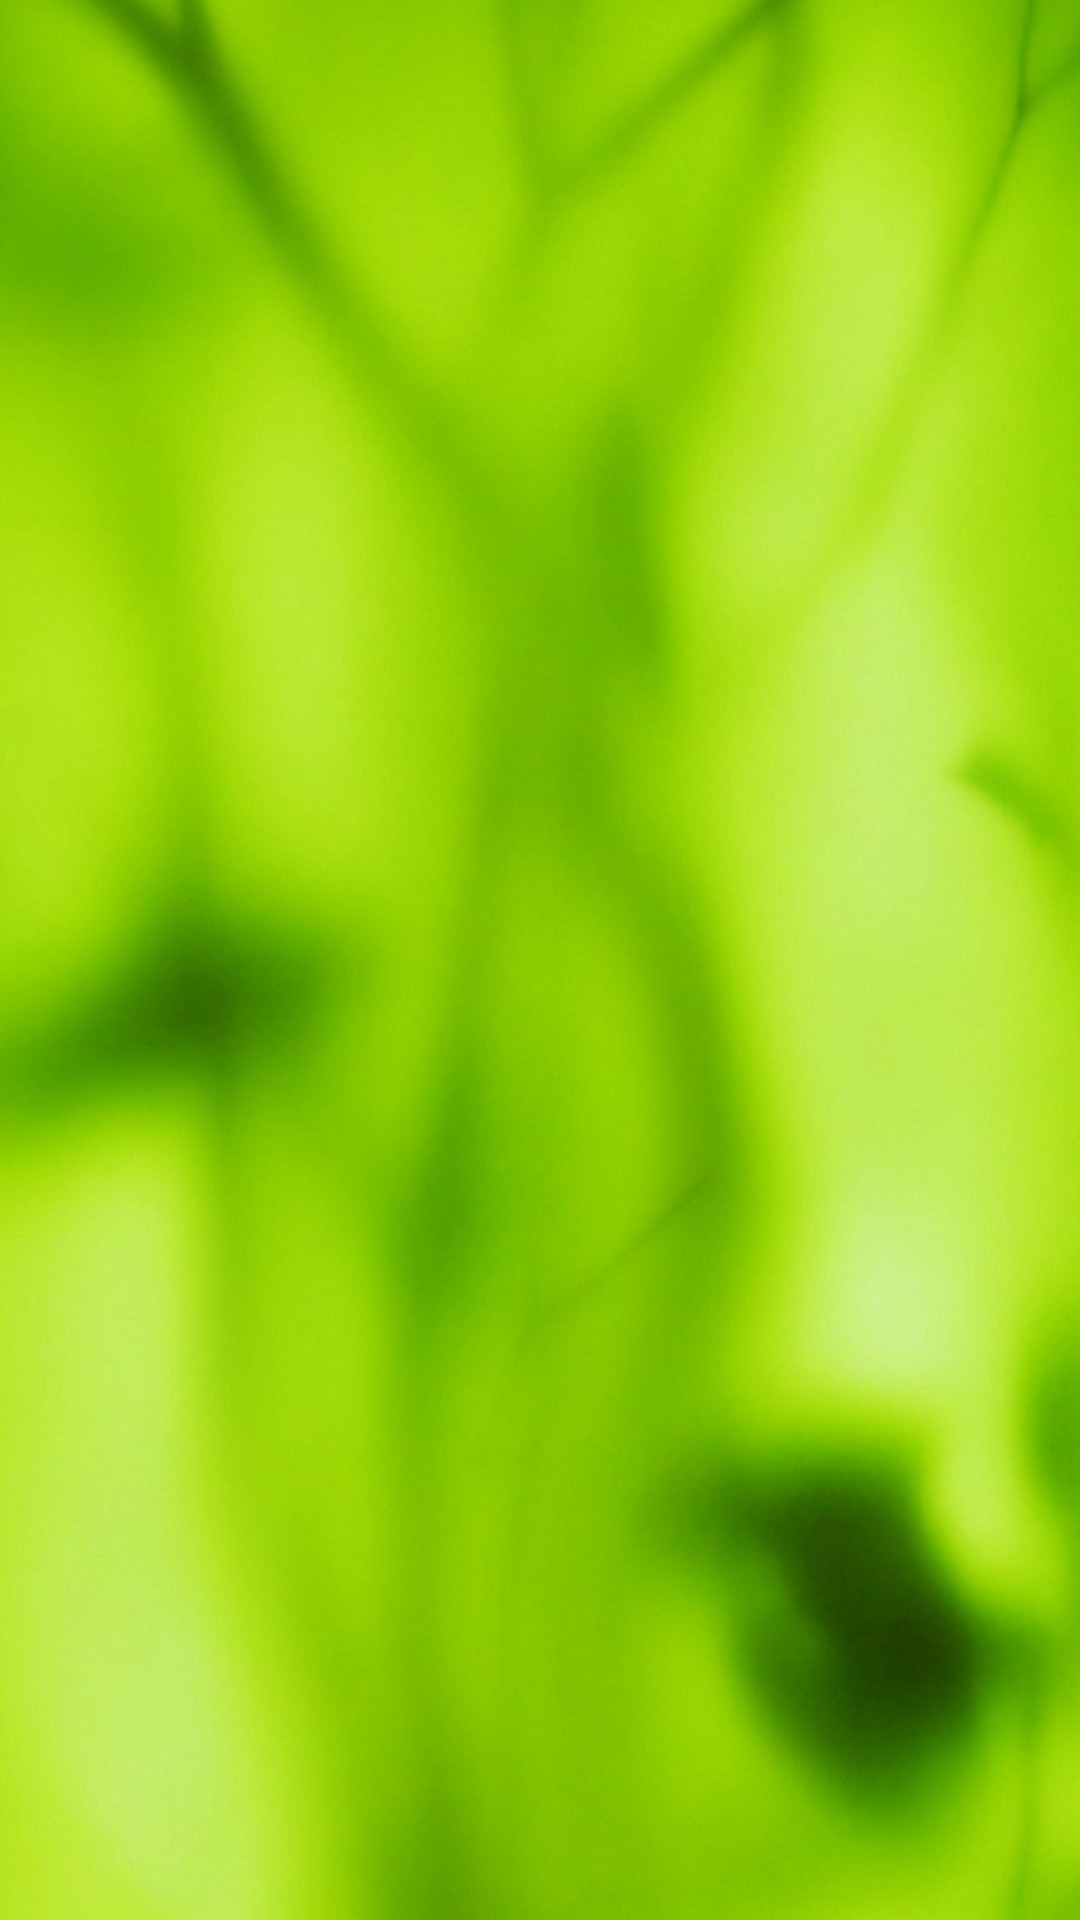 green colour wallpaper,green,nature,leaf,grass,close up